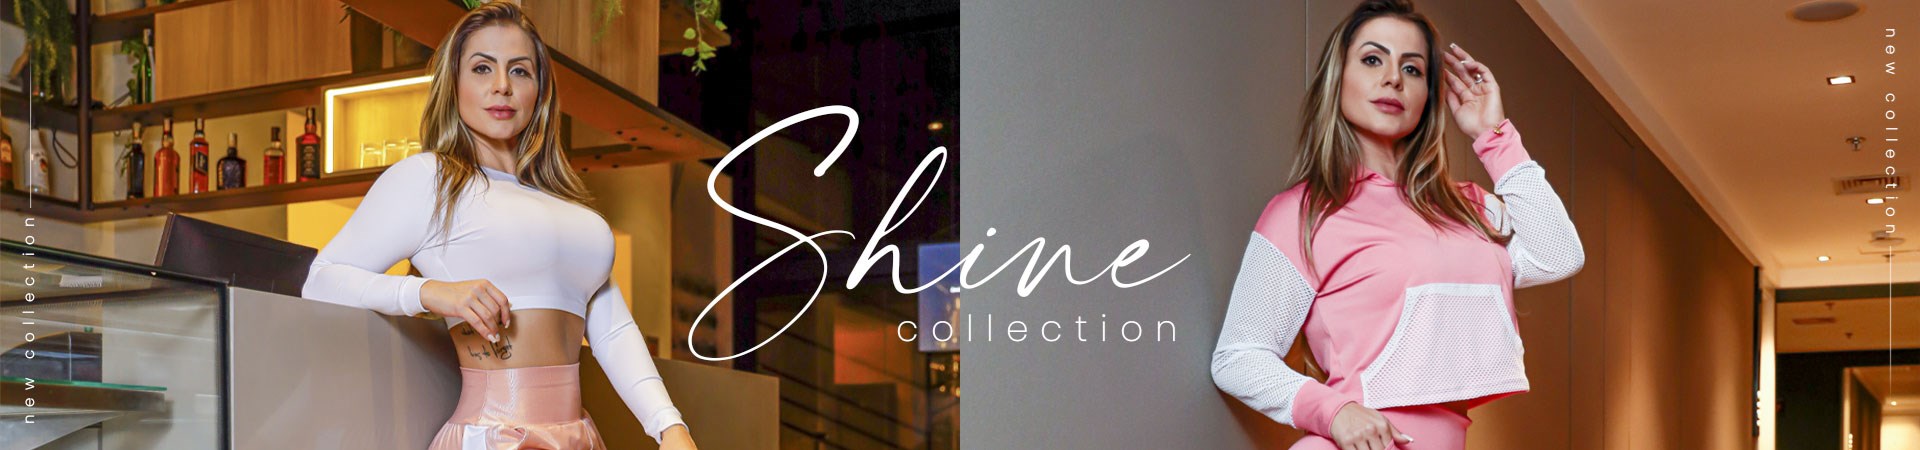 Shine Collection | Fitmoda